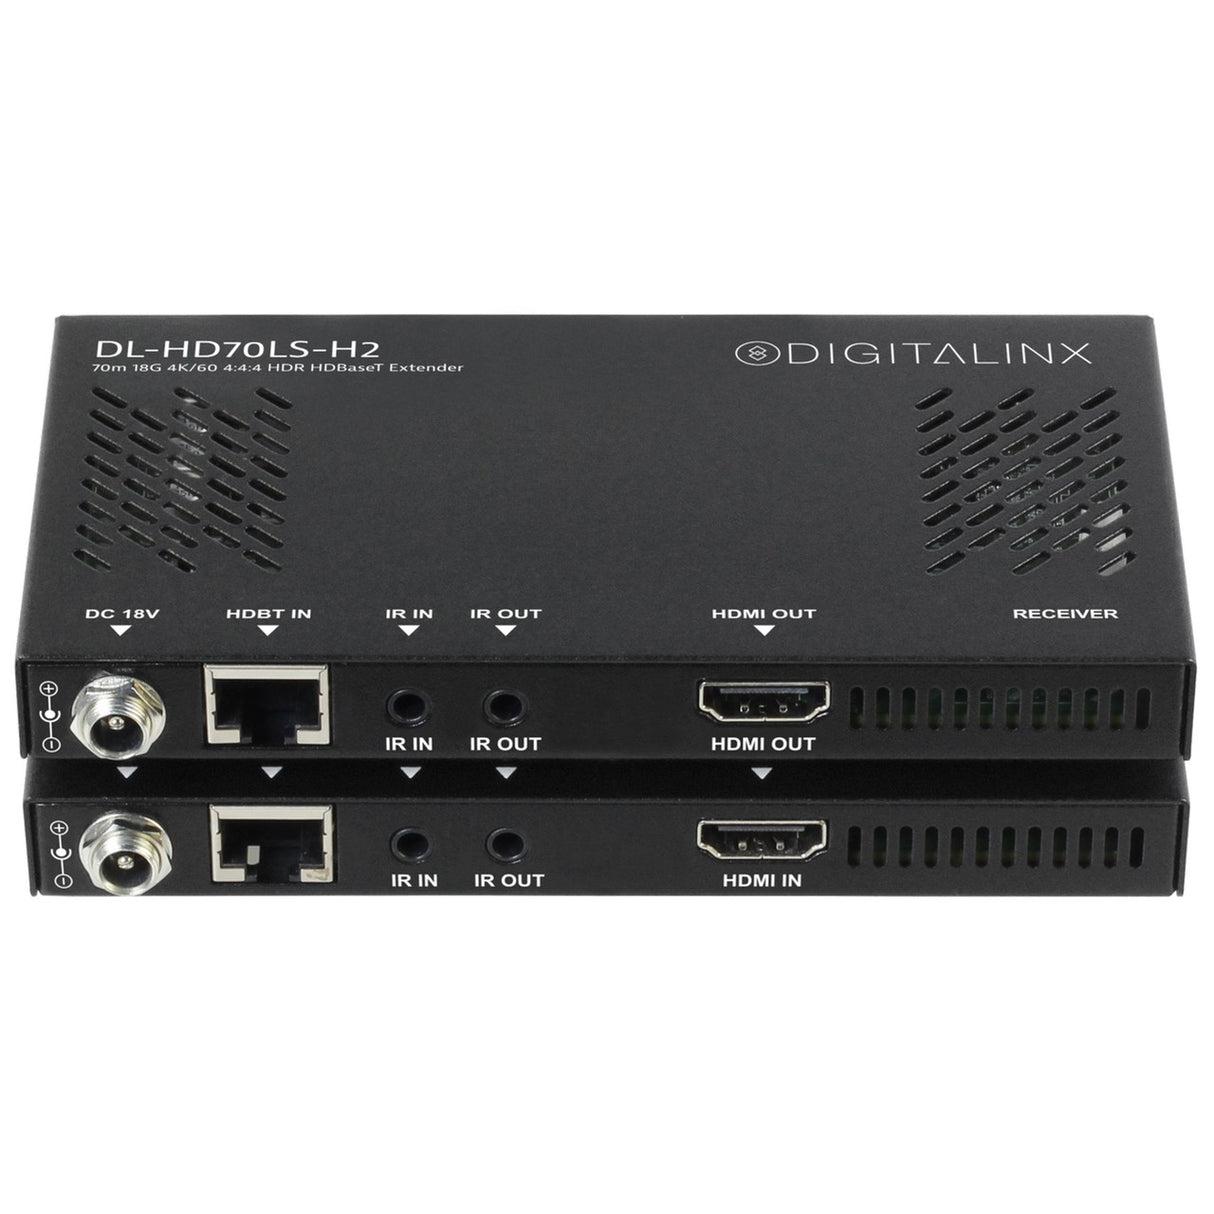 DigitaLinx DL-HD70LS-H2 4K60 HDMI 2.0 HDBaseT Extension Set